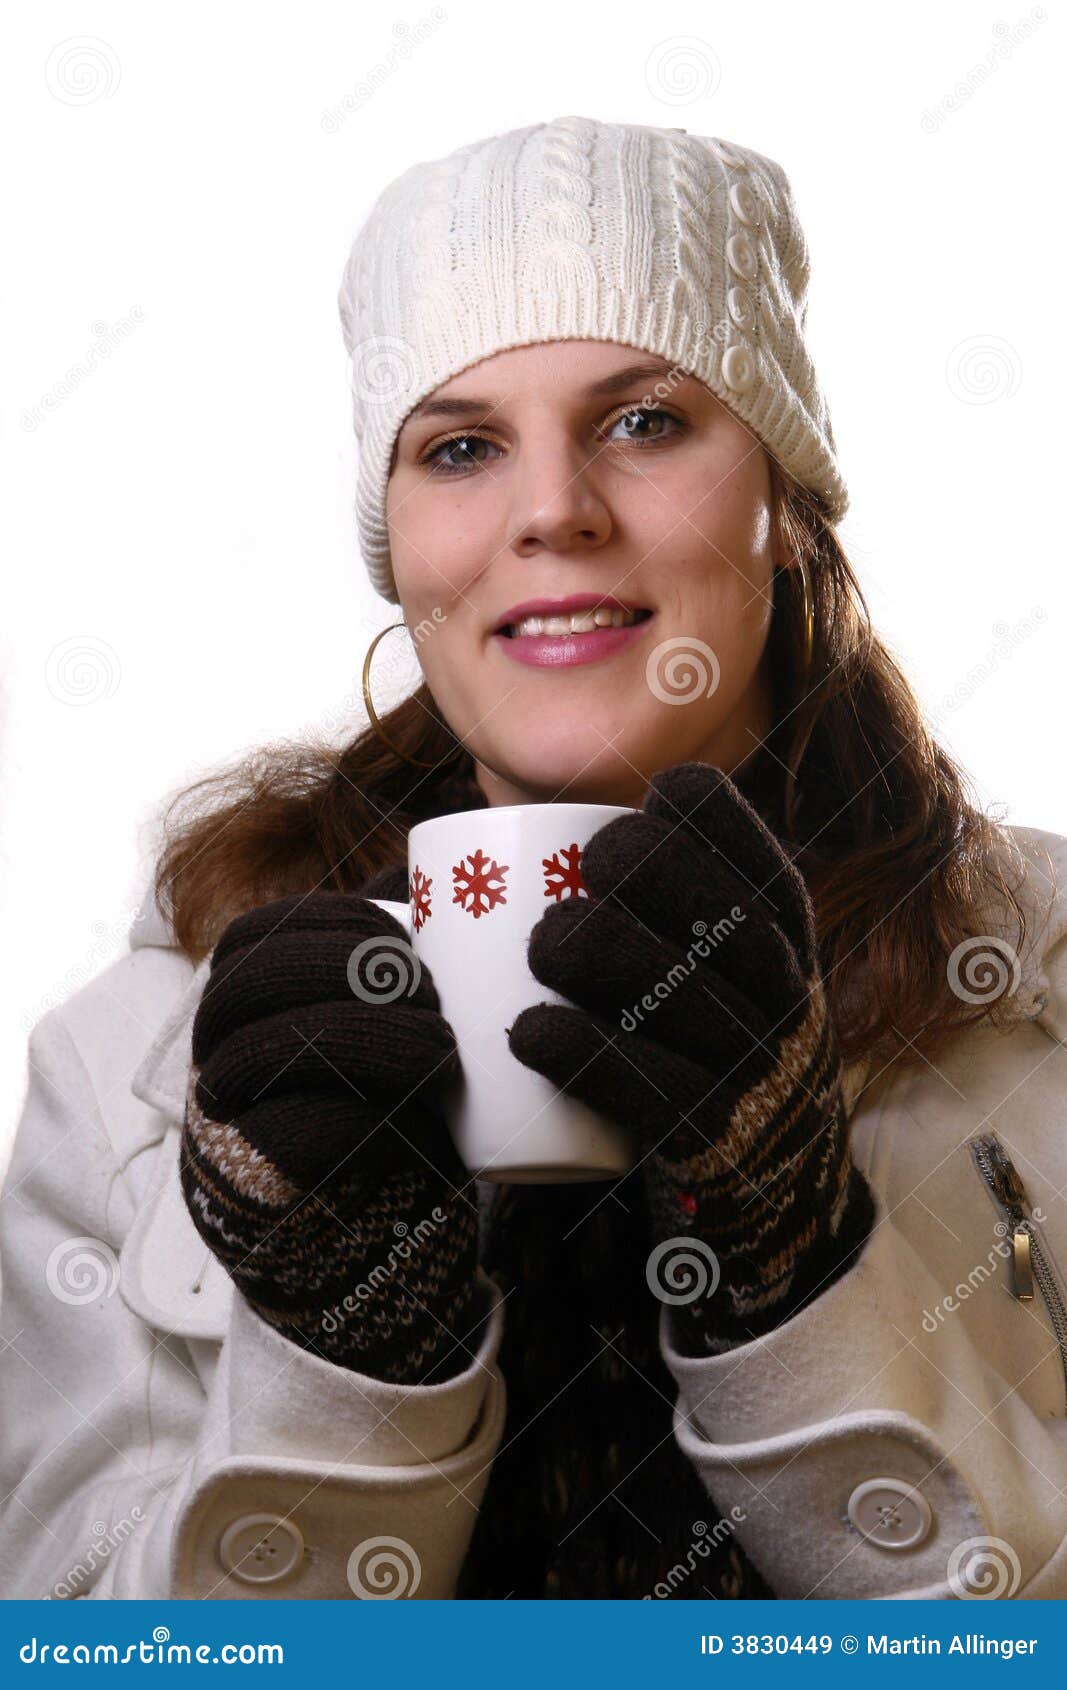 Hot Coffee stock image. Image of drink, pretty, season - 3830449